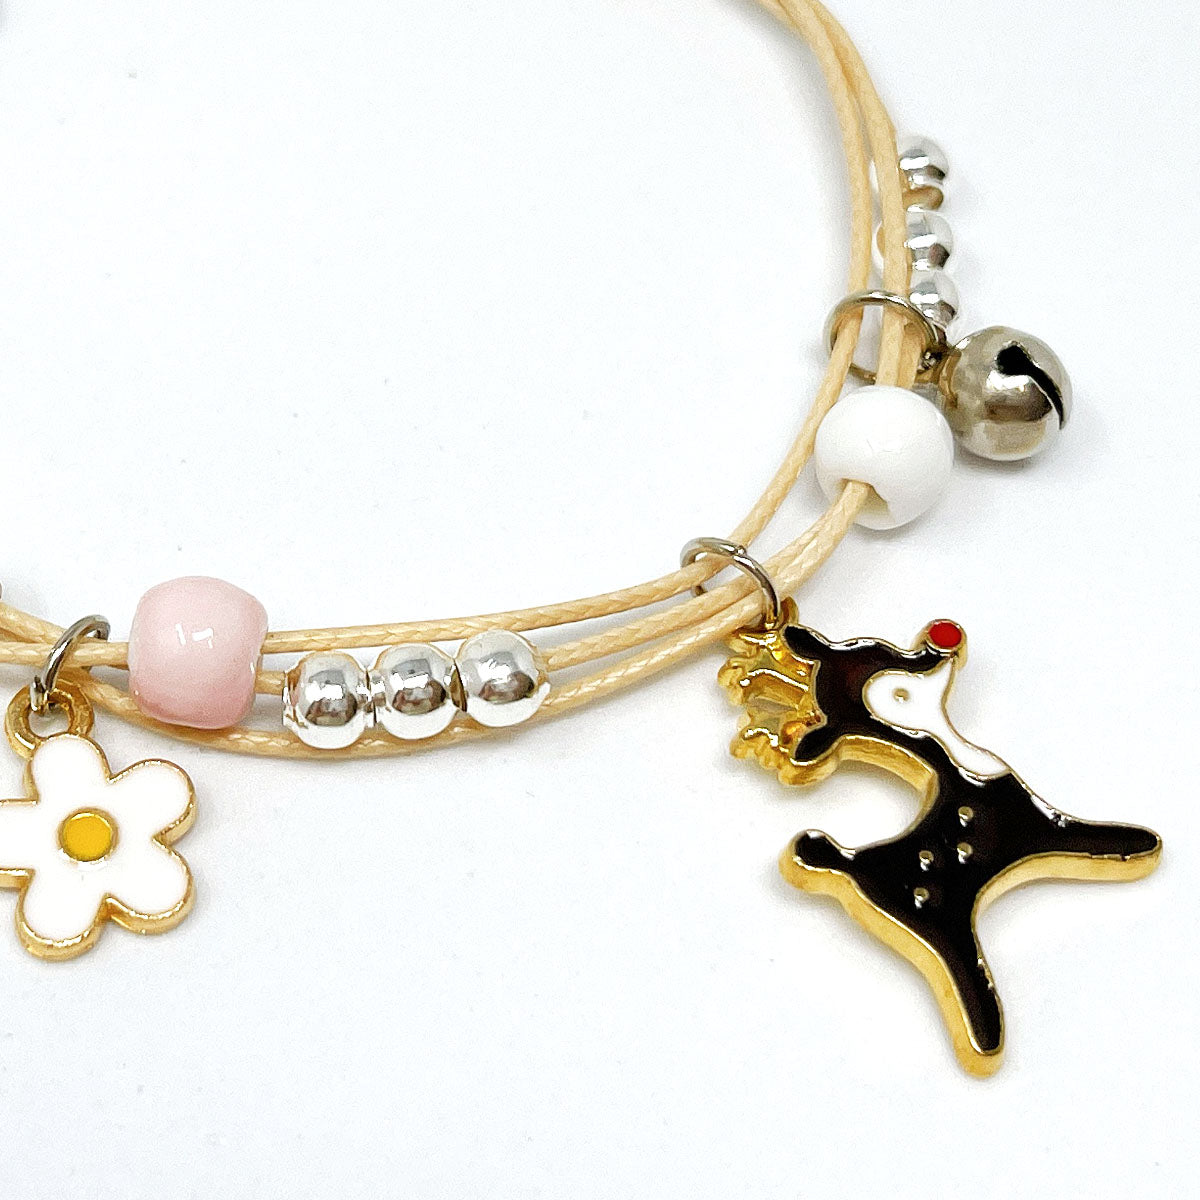 Wrapables Friendship Beaded Enamel Charm Bracelet Pink Crown Bunny Crystal Beads